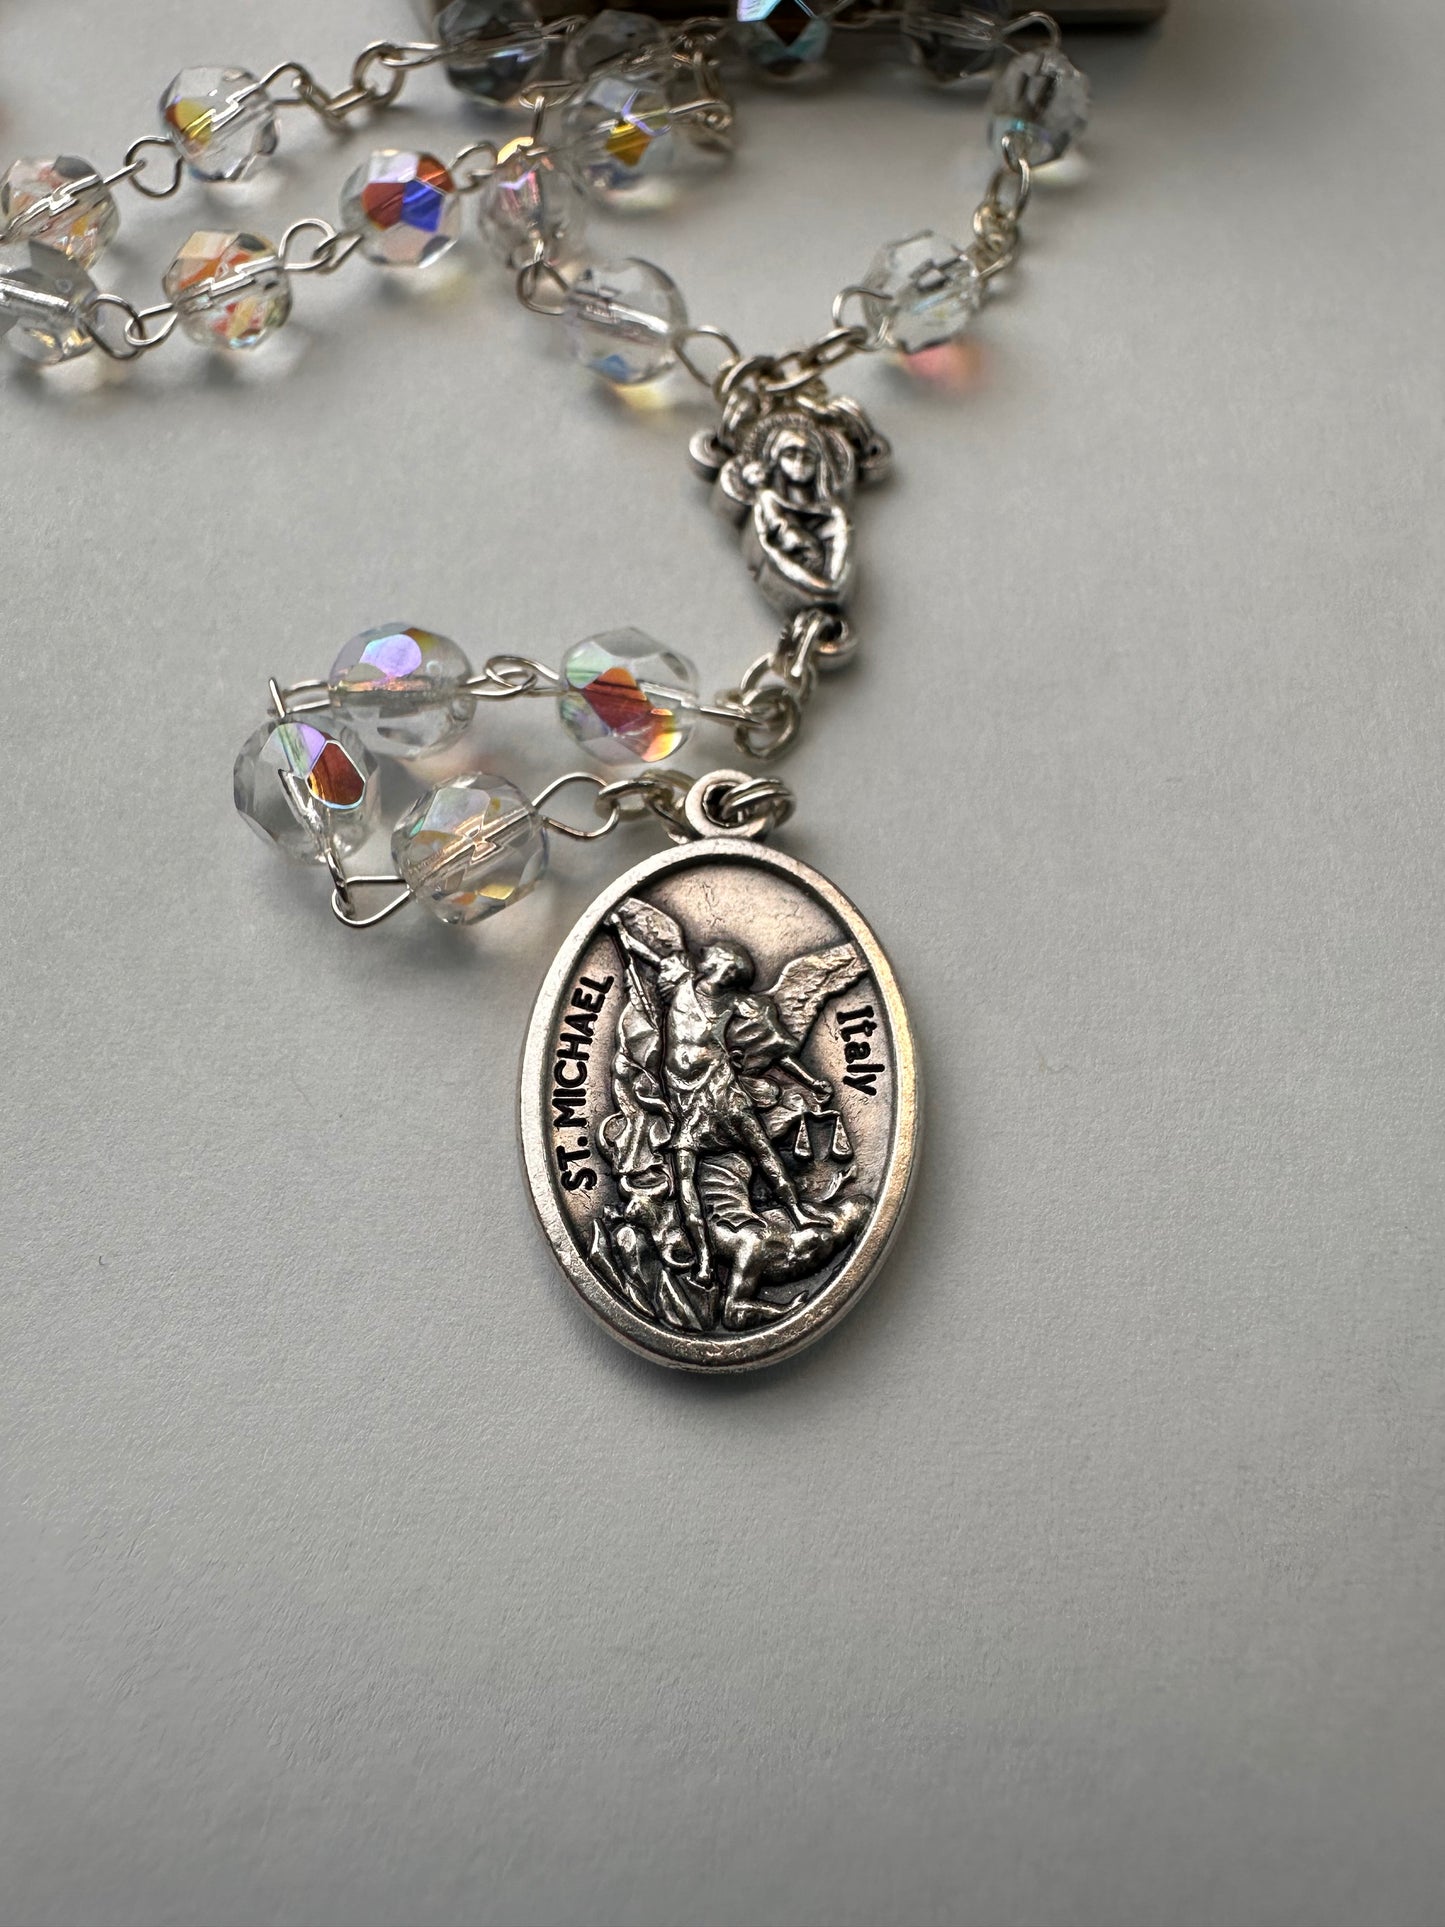 Metal Rosary Holder/ Saint Michael the Archangel rosary